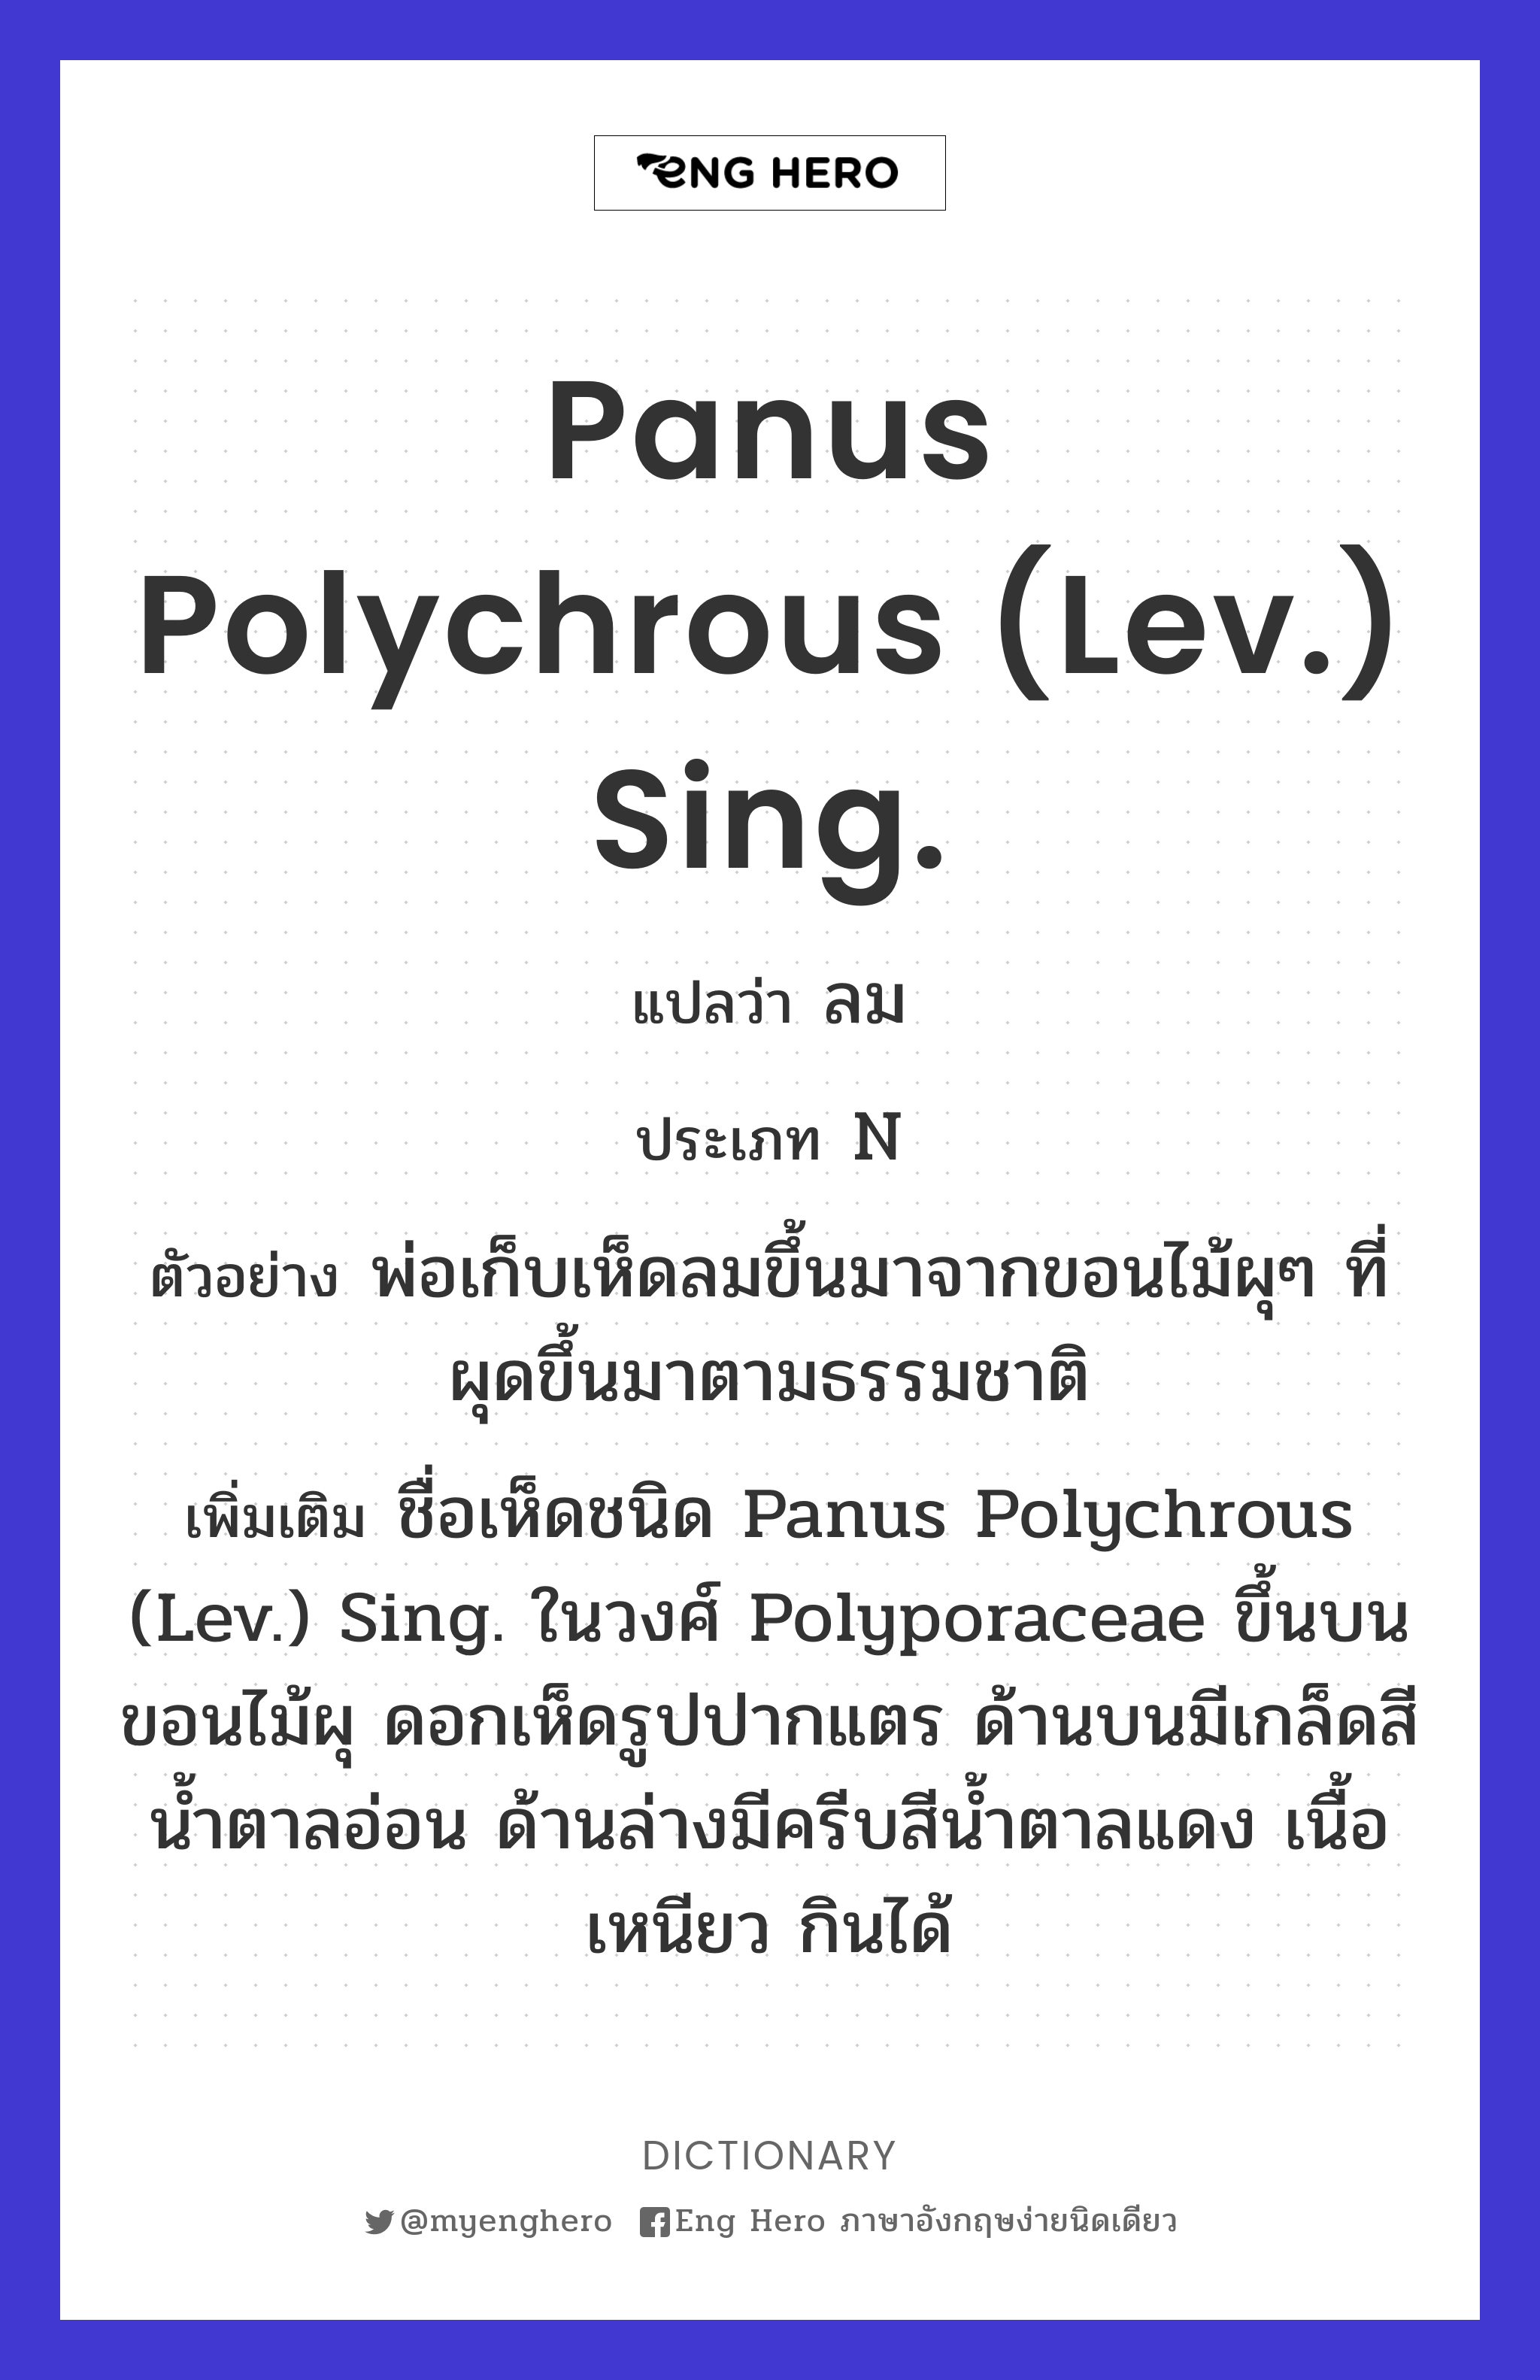 Panus polychrous (Lev.) Sing.